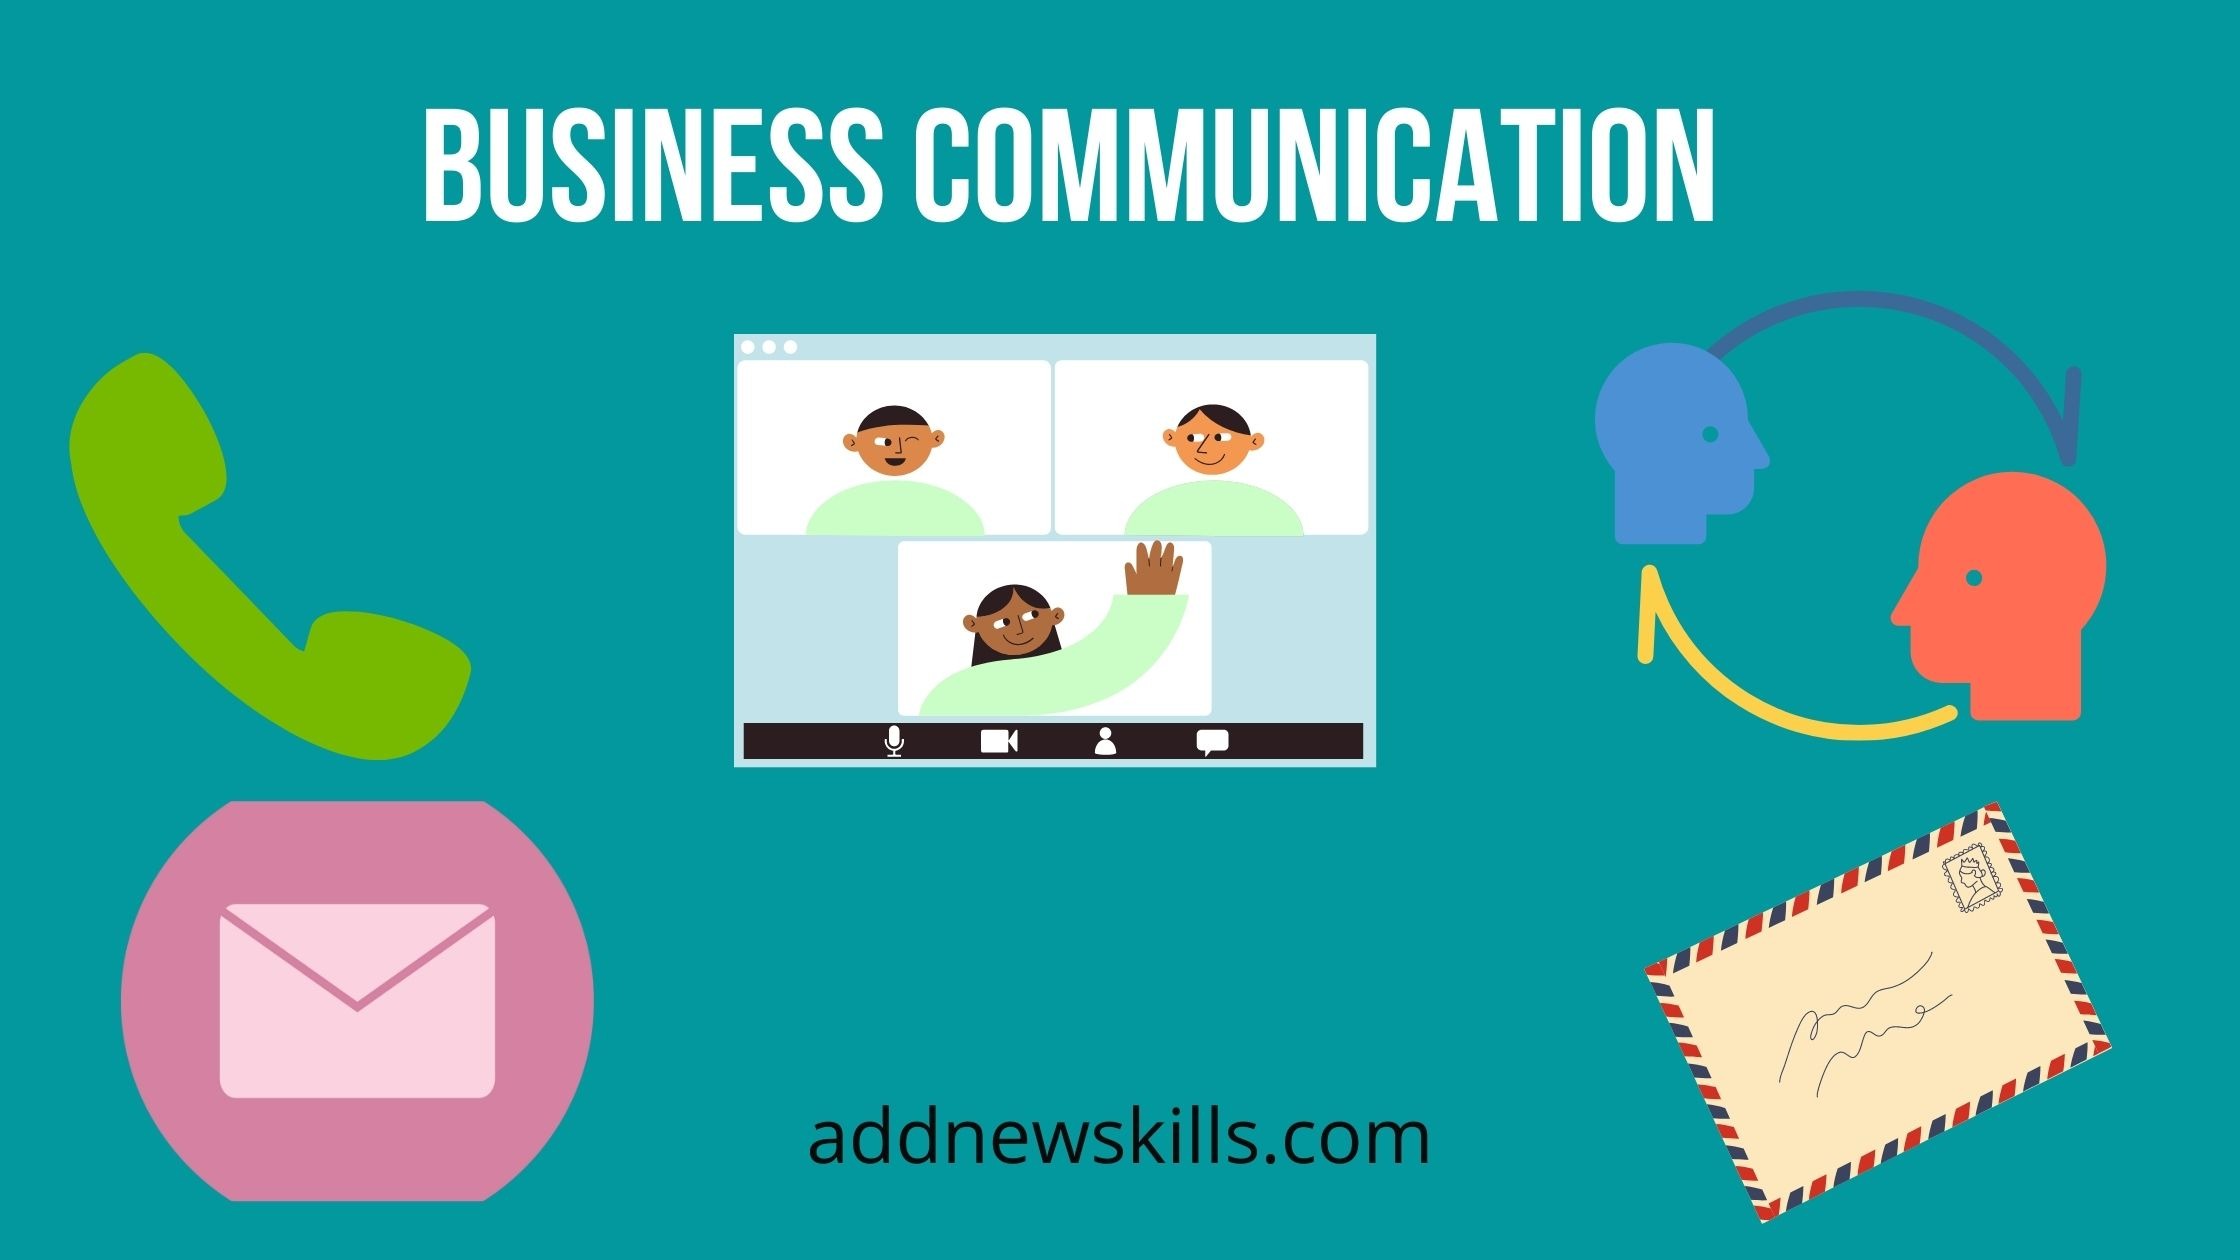 business communication definition essay